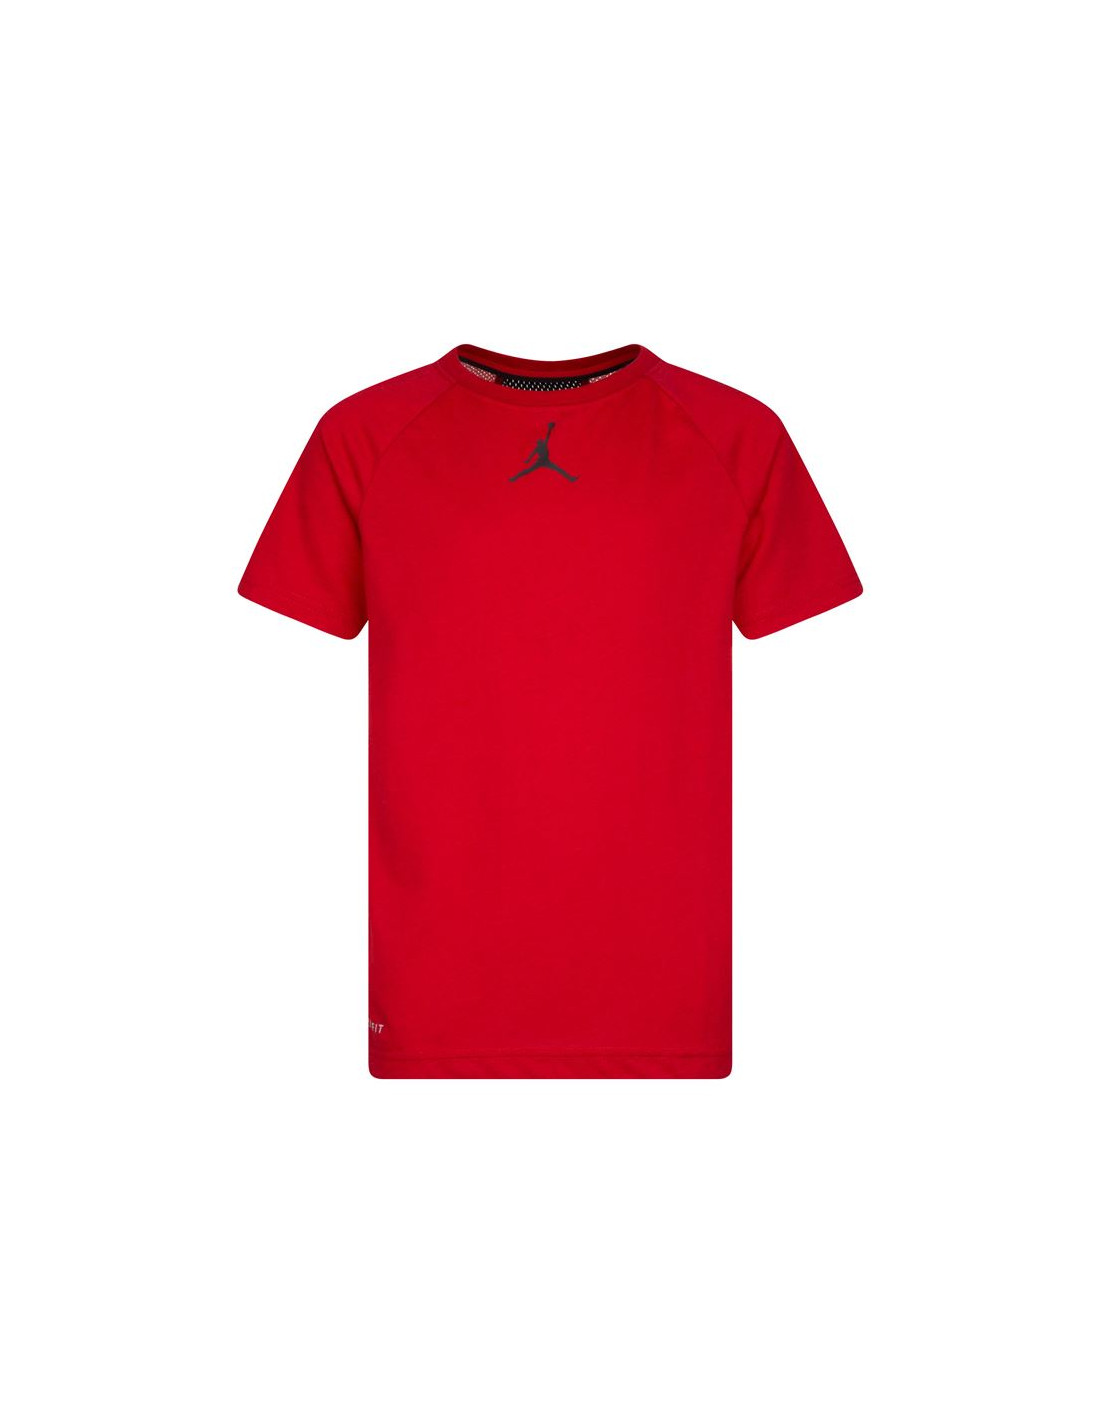 Camiseta nike kids jordan core performance niño red